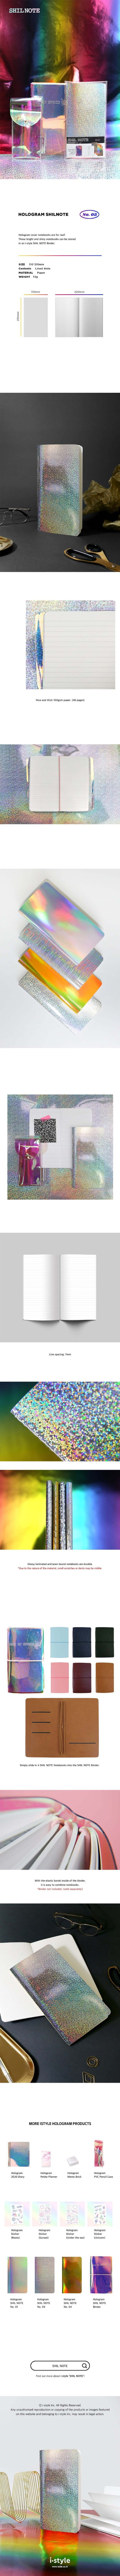 Shil Note Hologramm-Notizbuch + Aufkleber-Set (02)